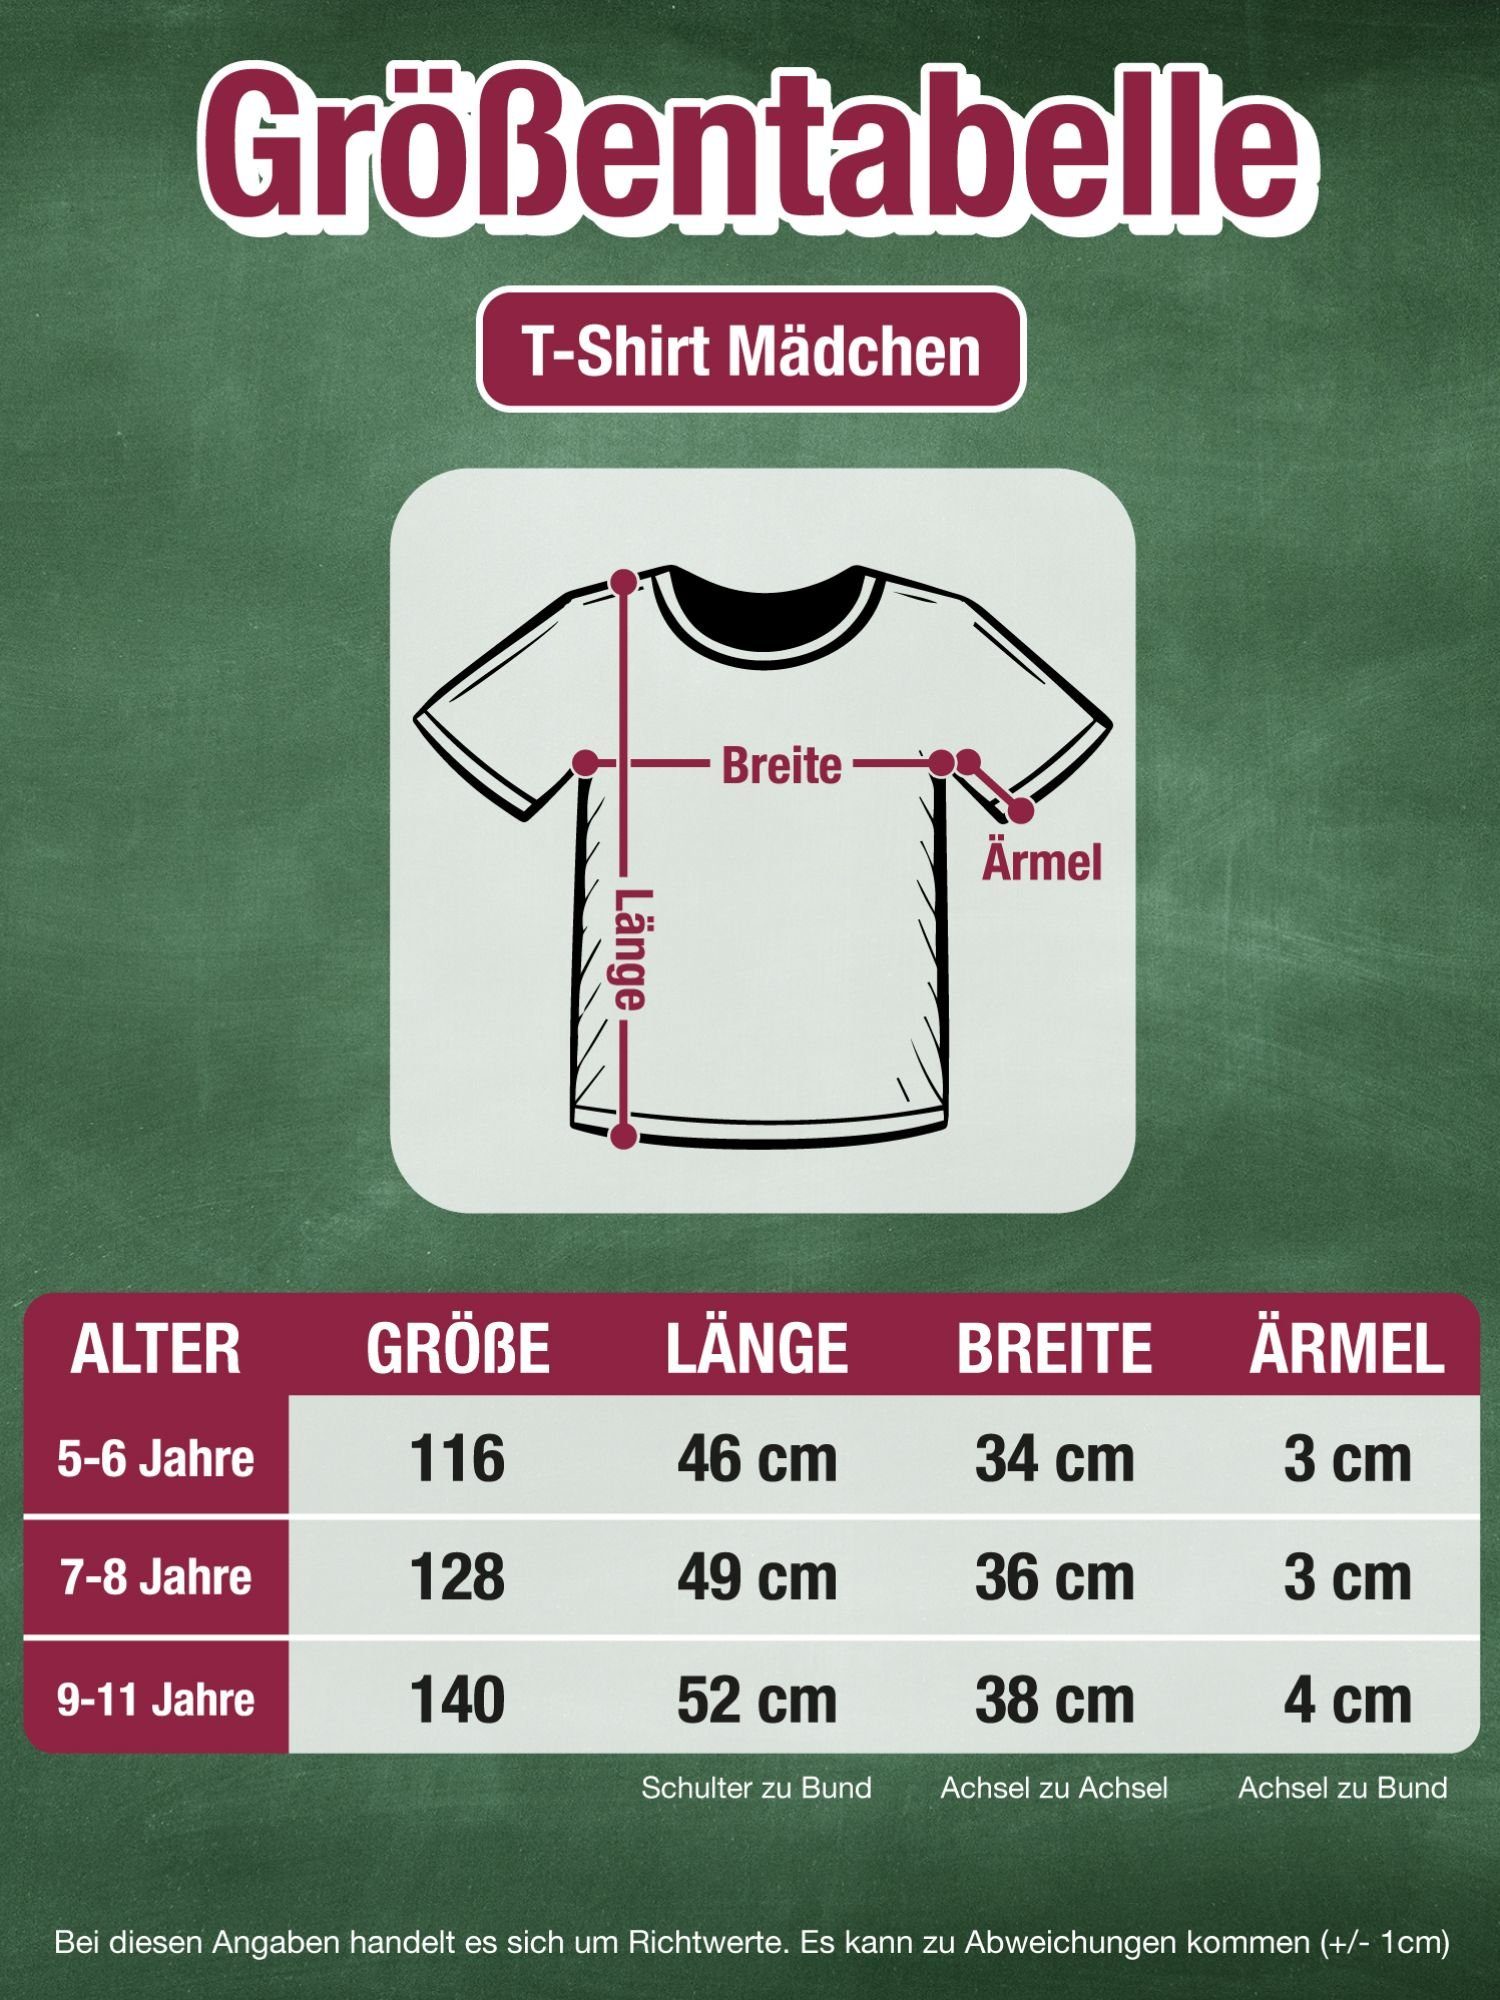 Bye, Kindergarten 1 Bye T-Shirt Mädchen Shirtracer Einschulung Fuchsia